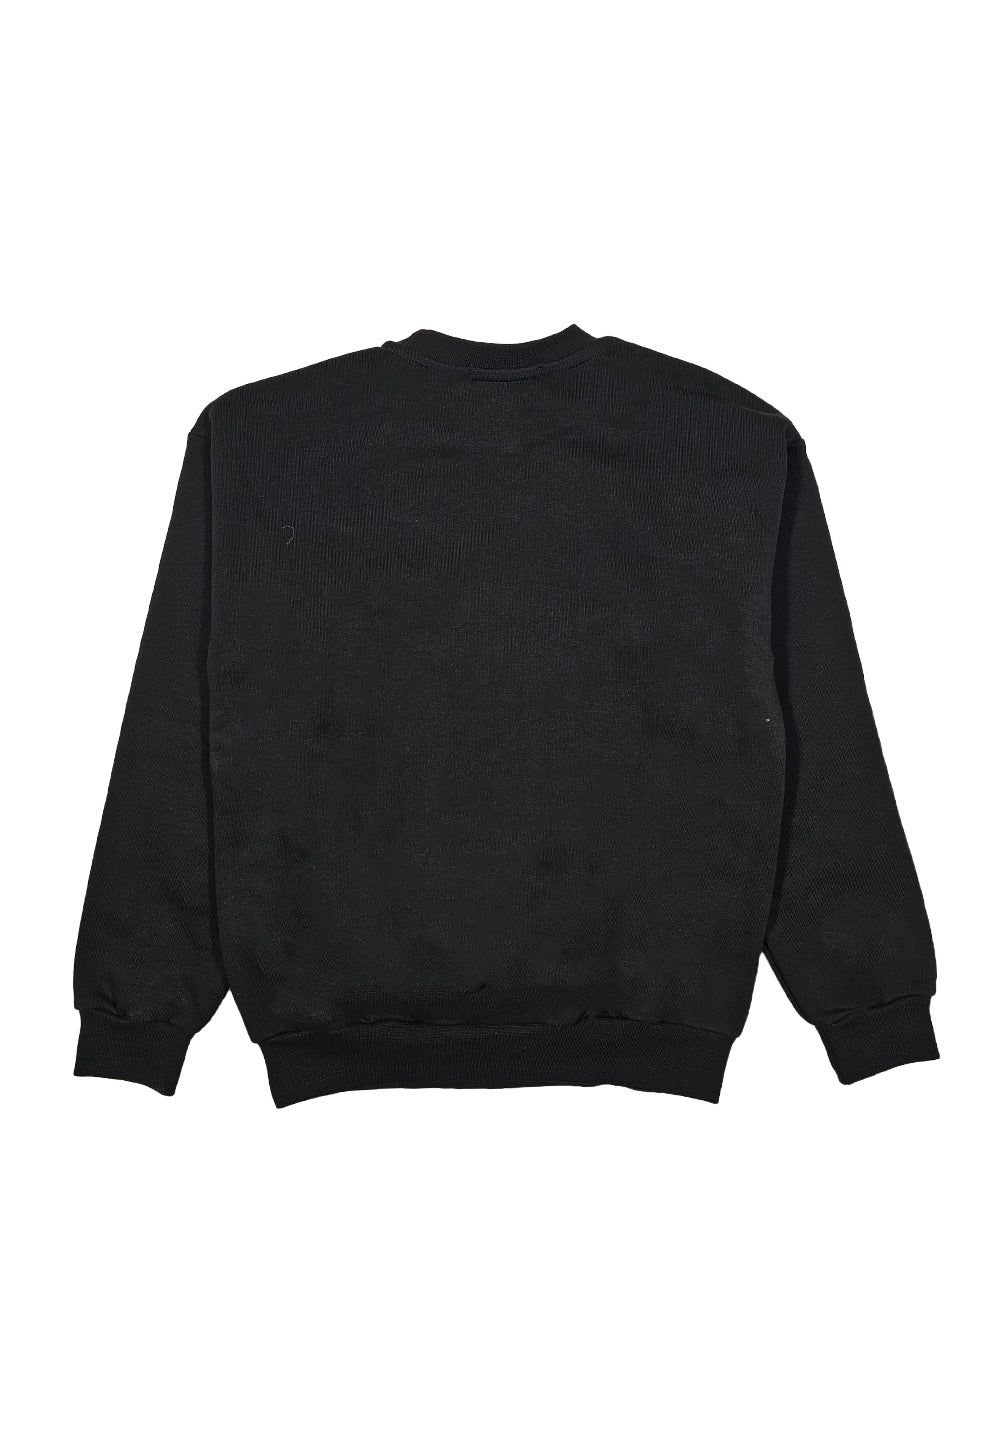 Black crewneck sweatshirt for boy